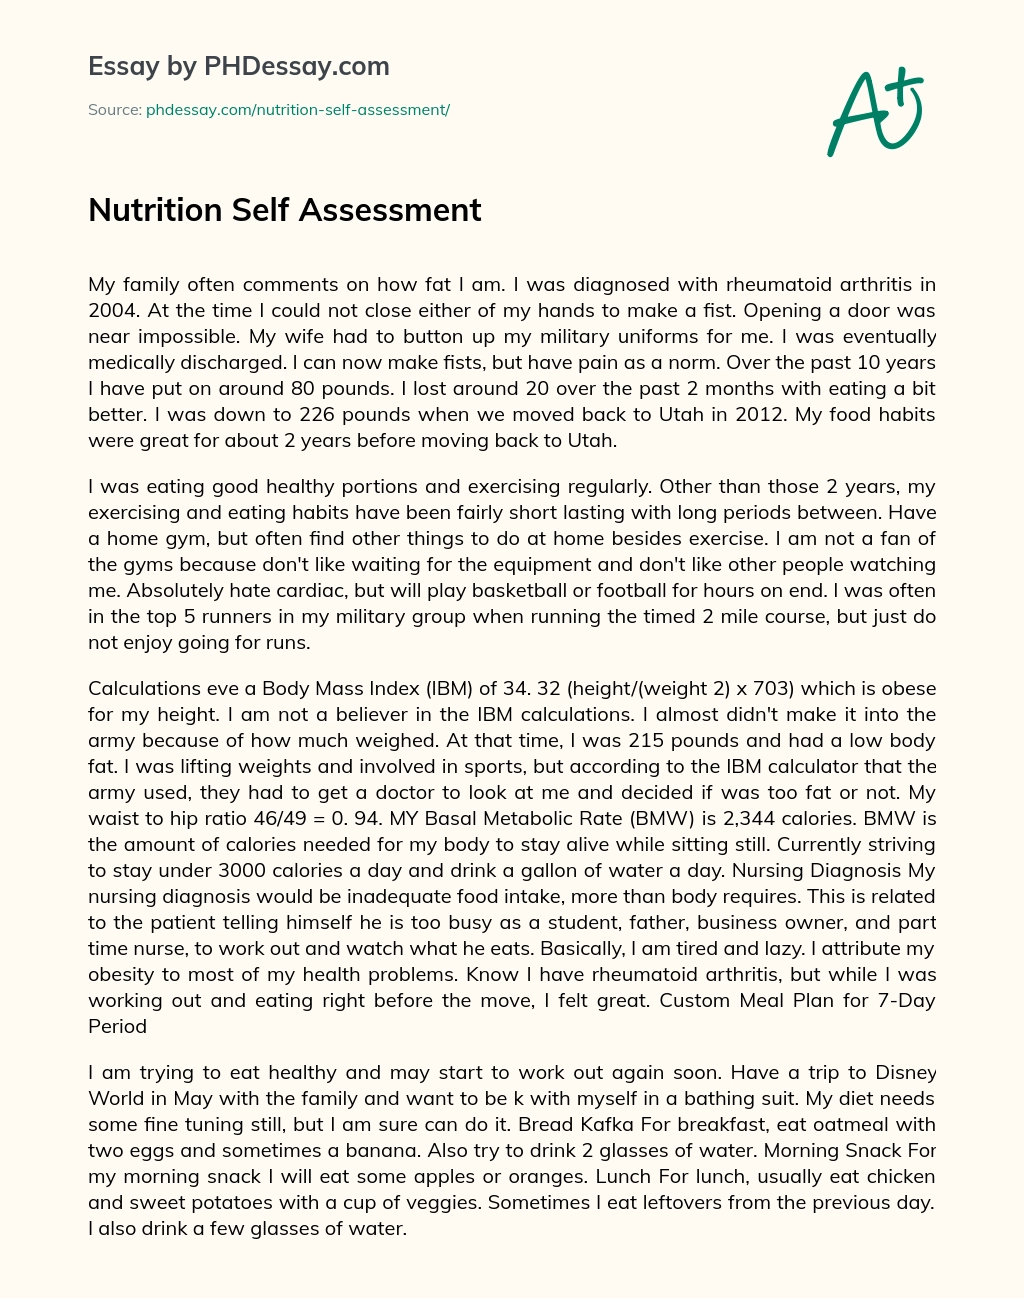 Nutrition Self Assessment essay